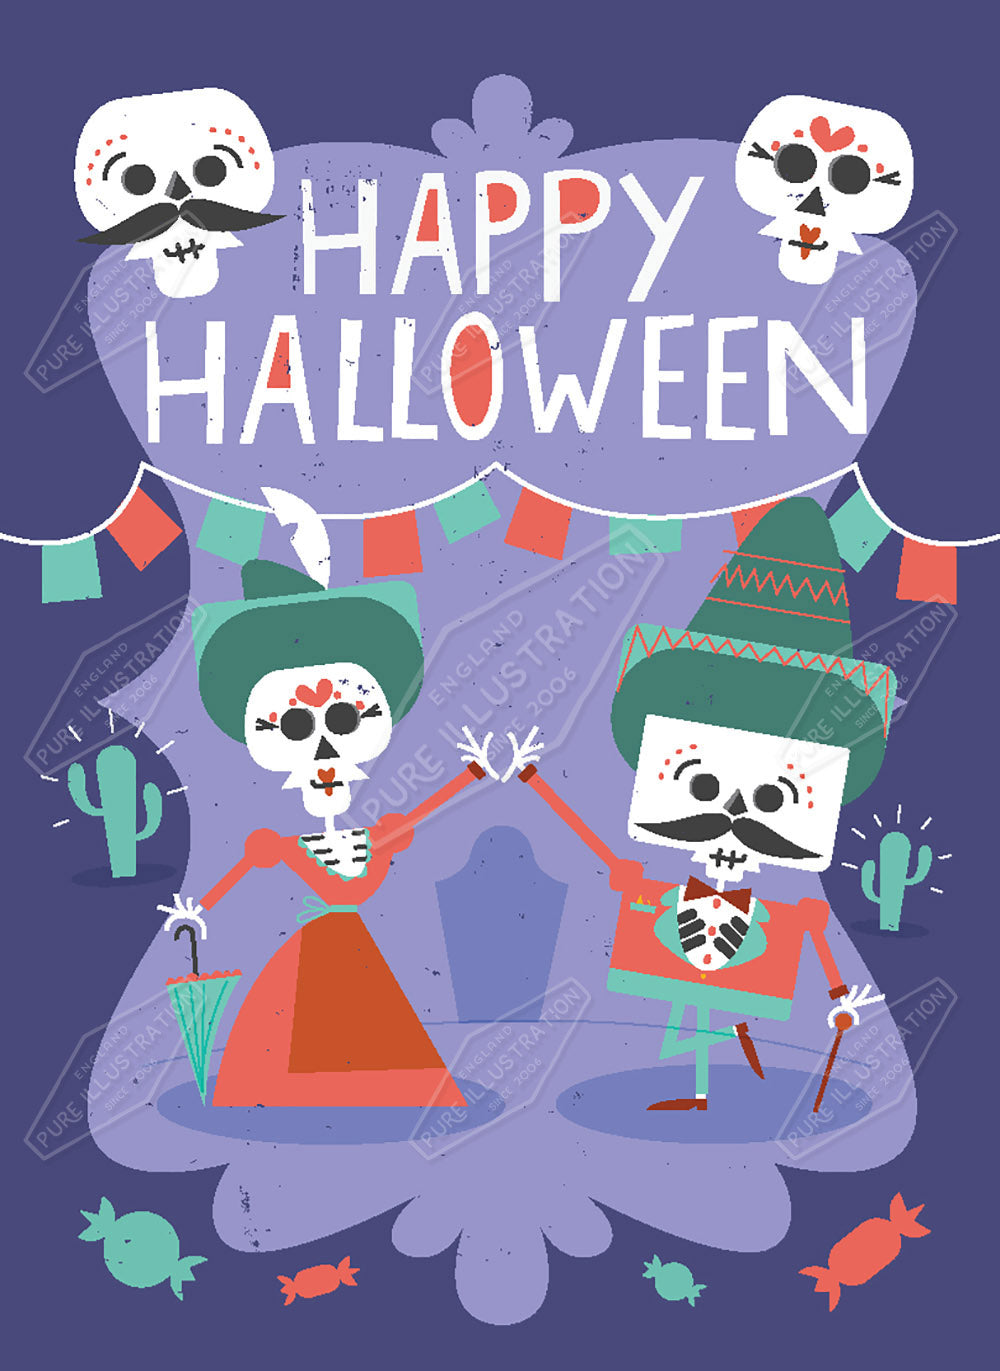 00034054RSW - Luke Swinney is represented by Pure Art Licensing Agency - Halloween Greeting Card Design